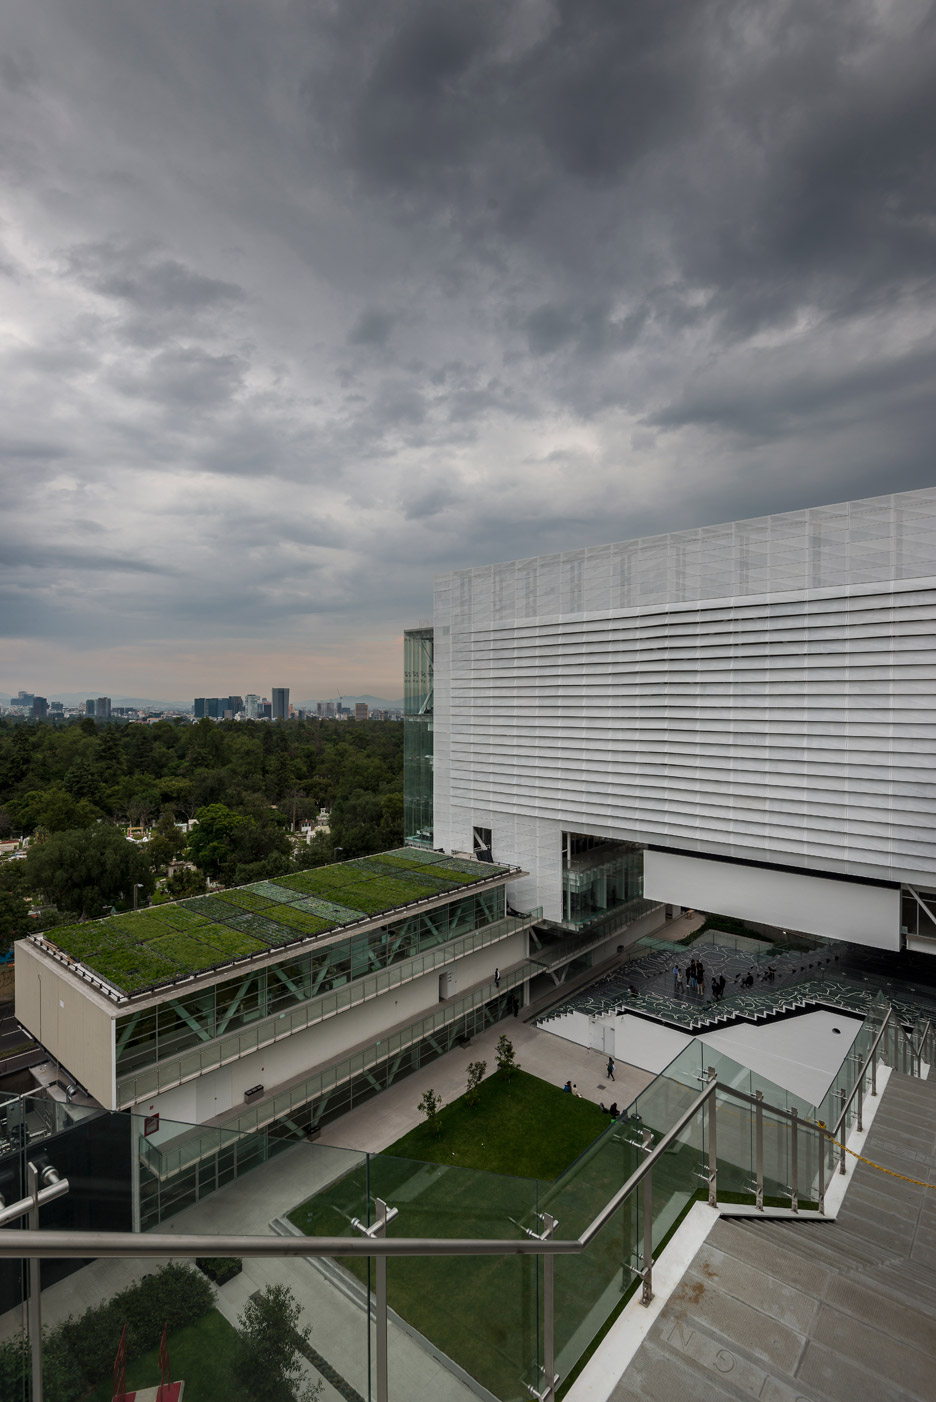 Enrique Norten Completes New Campus For Centro Art And Design School In Mexico City